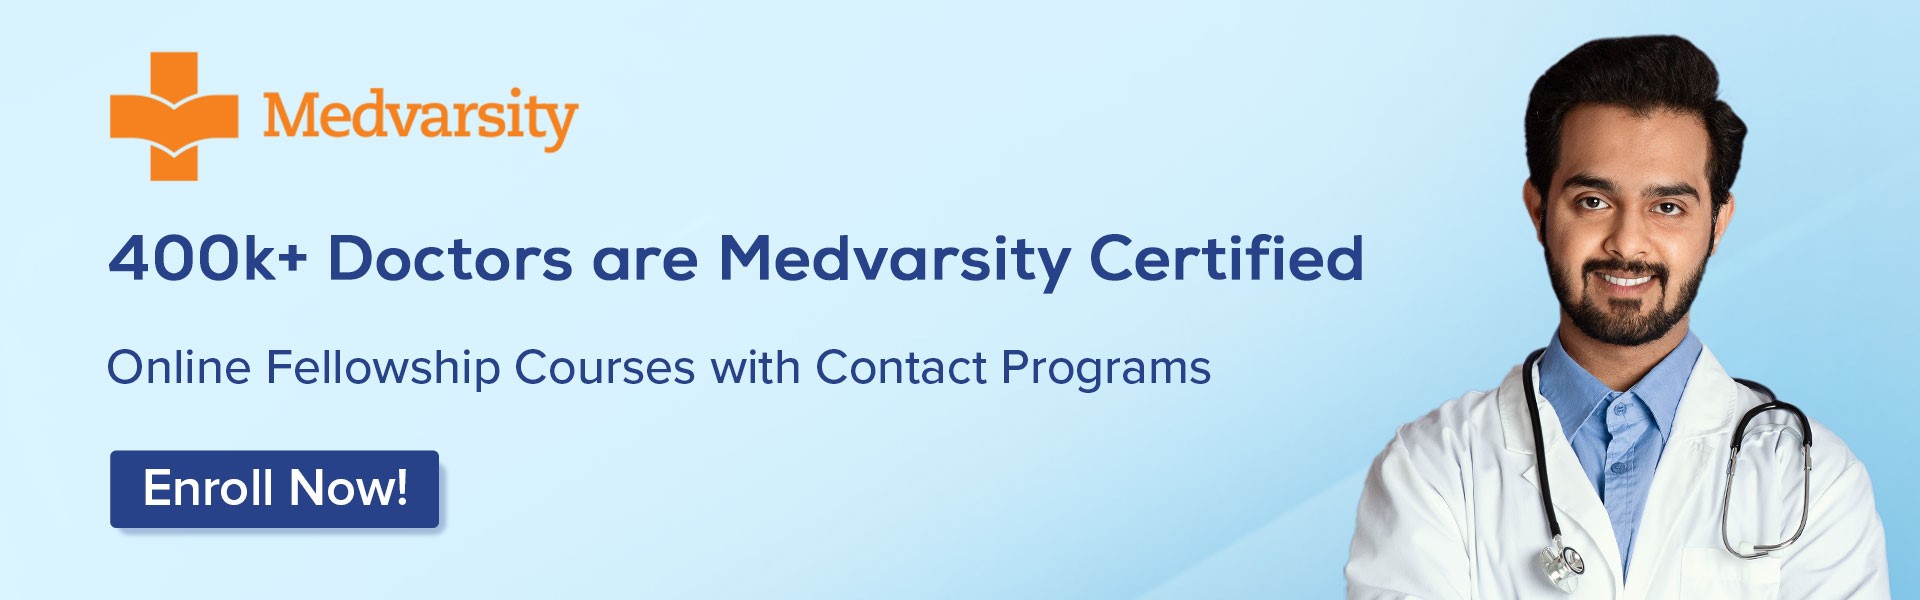 Medvarsity Fellowship Programs